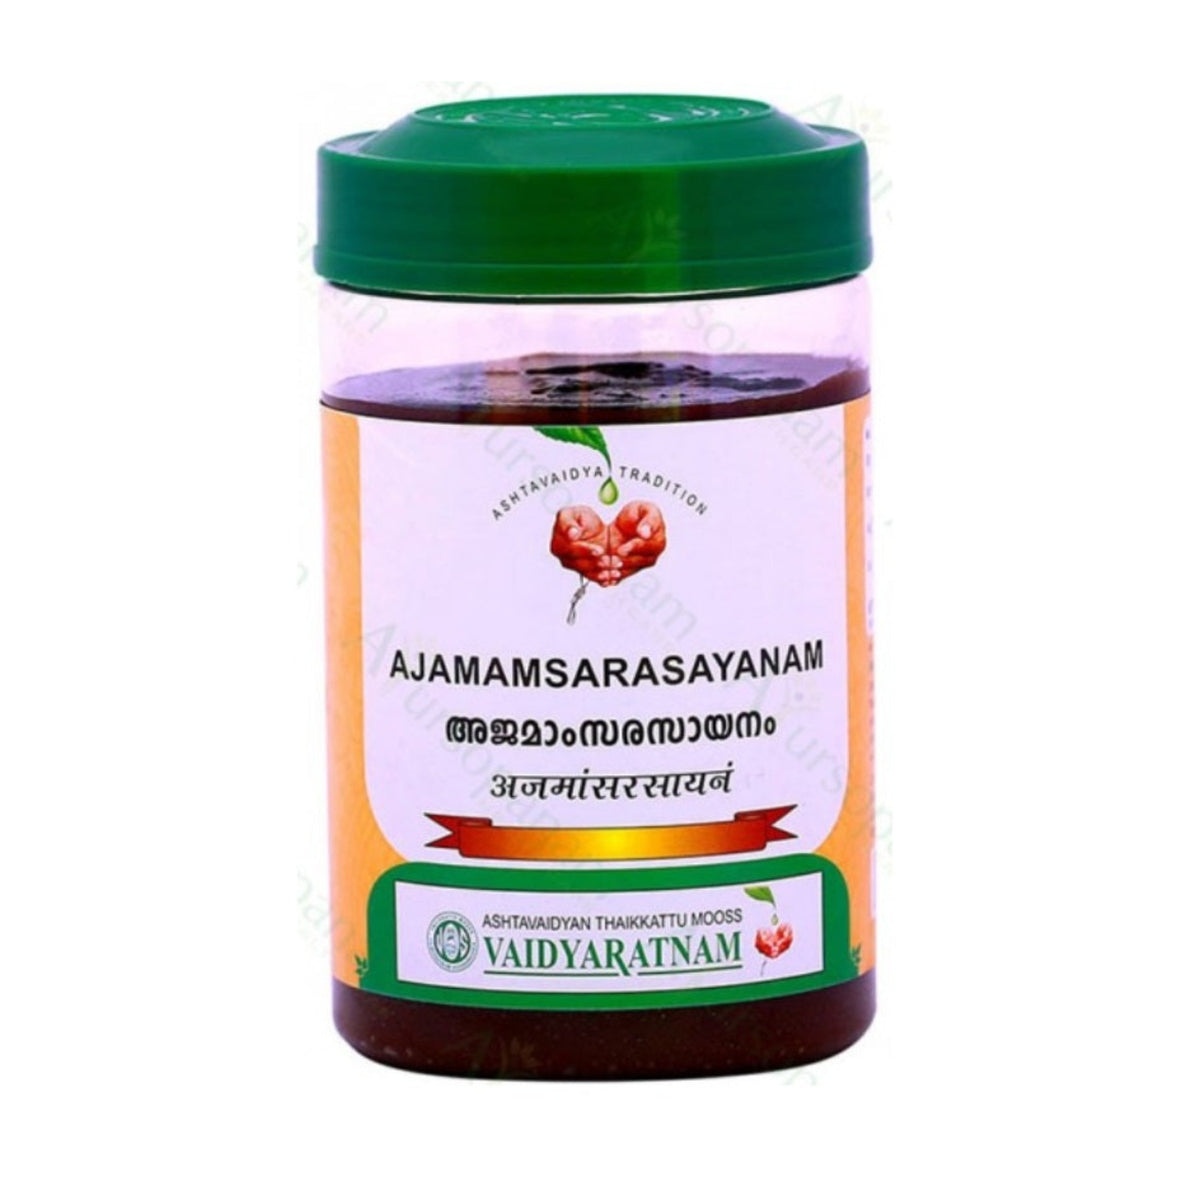 Vaidyaratnam Ayurvedic Ajamamsarasayanam Avaleh Lehams 500g